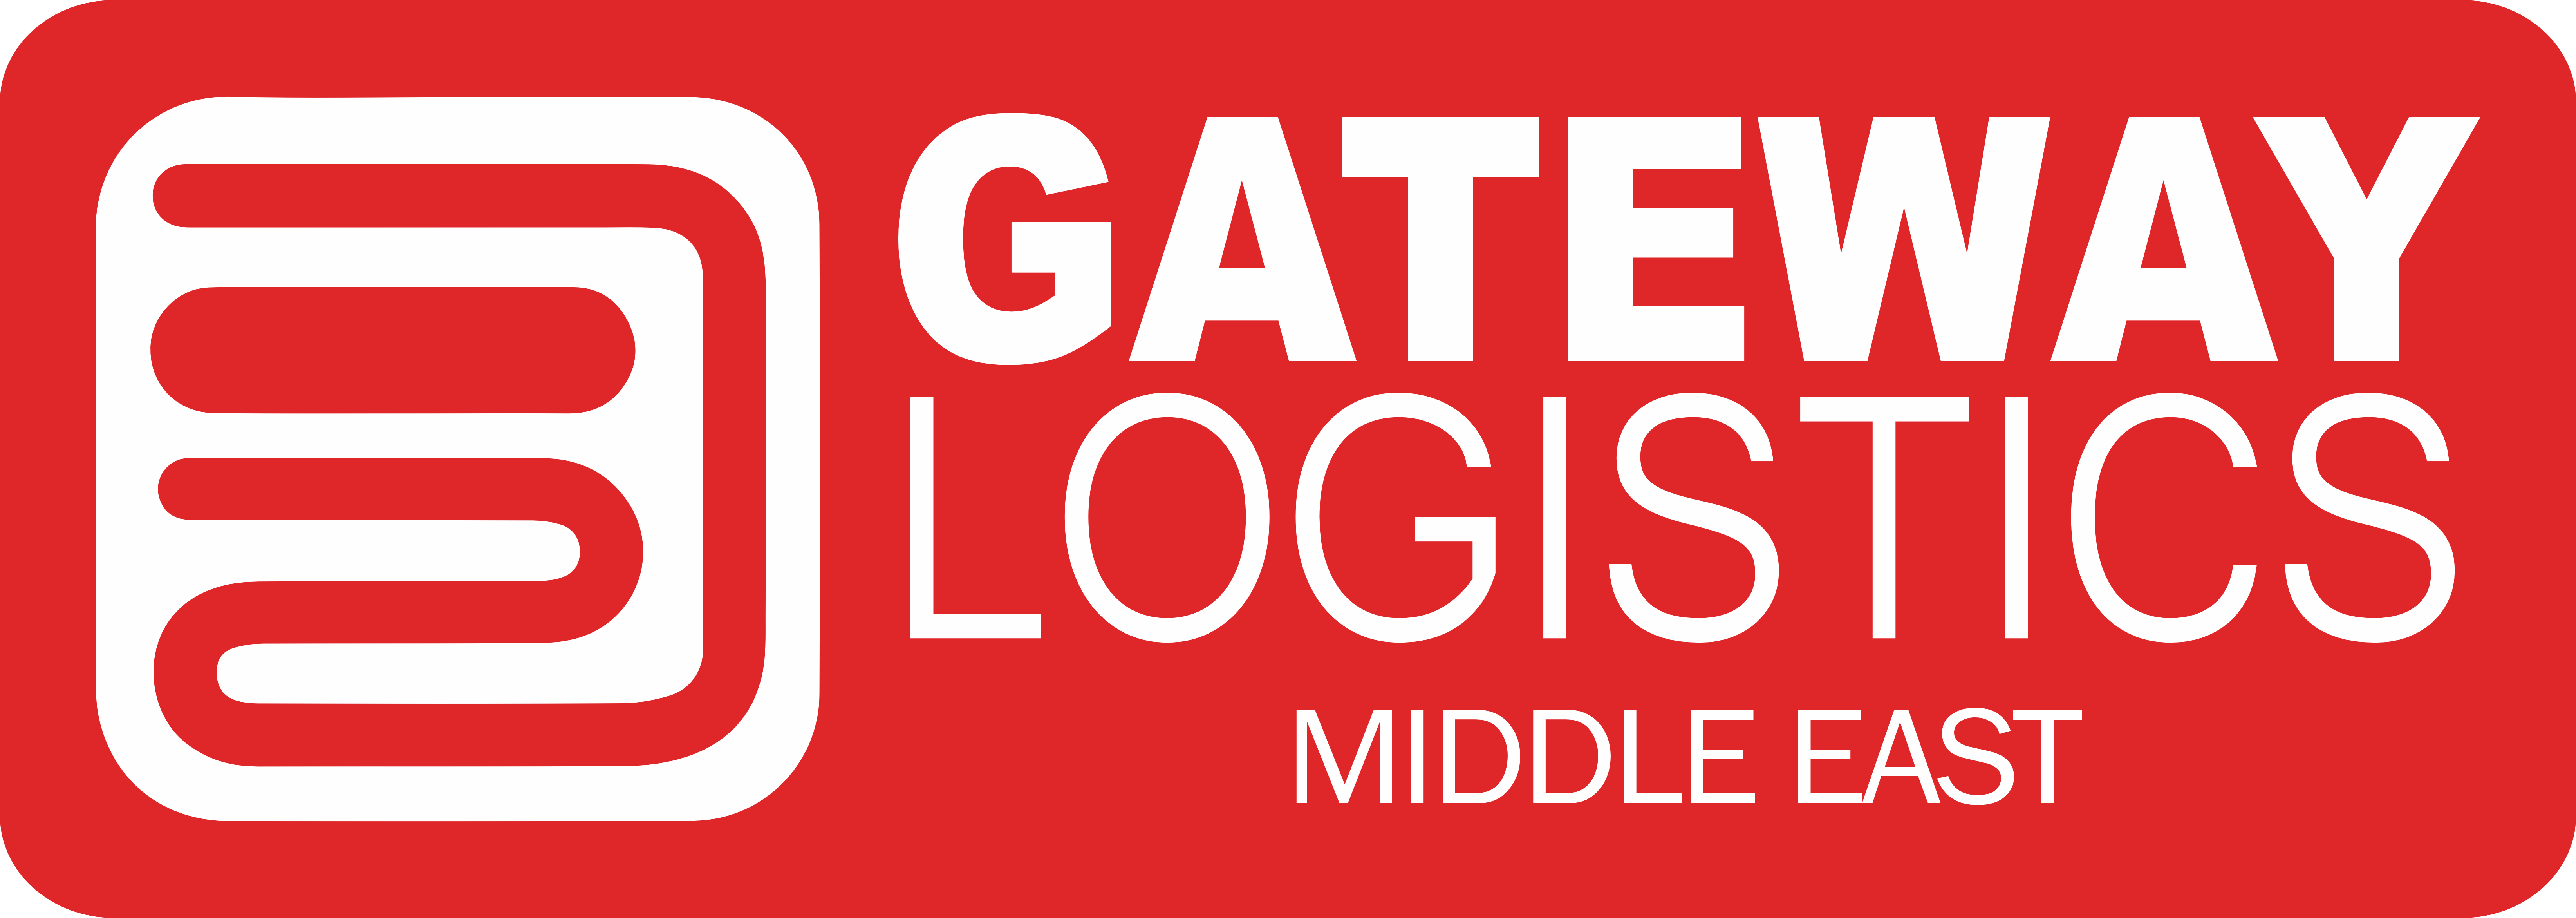 Gateway Logistics Middle East